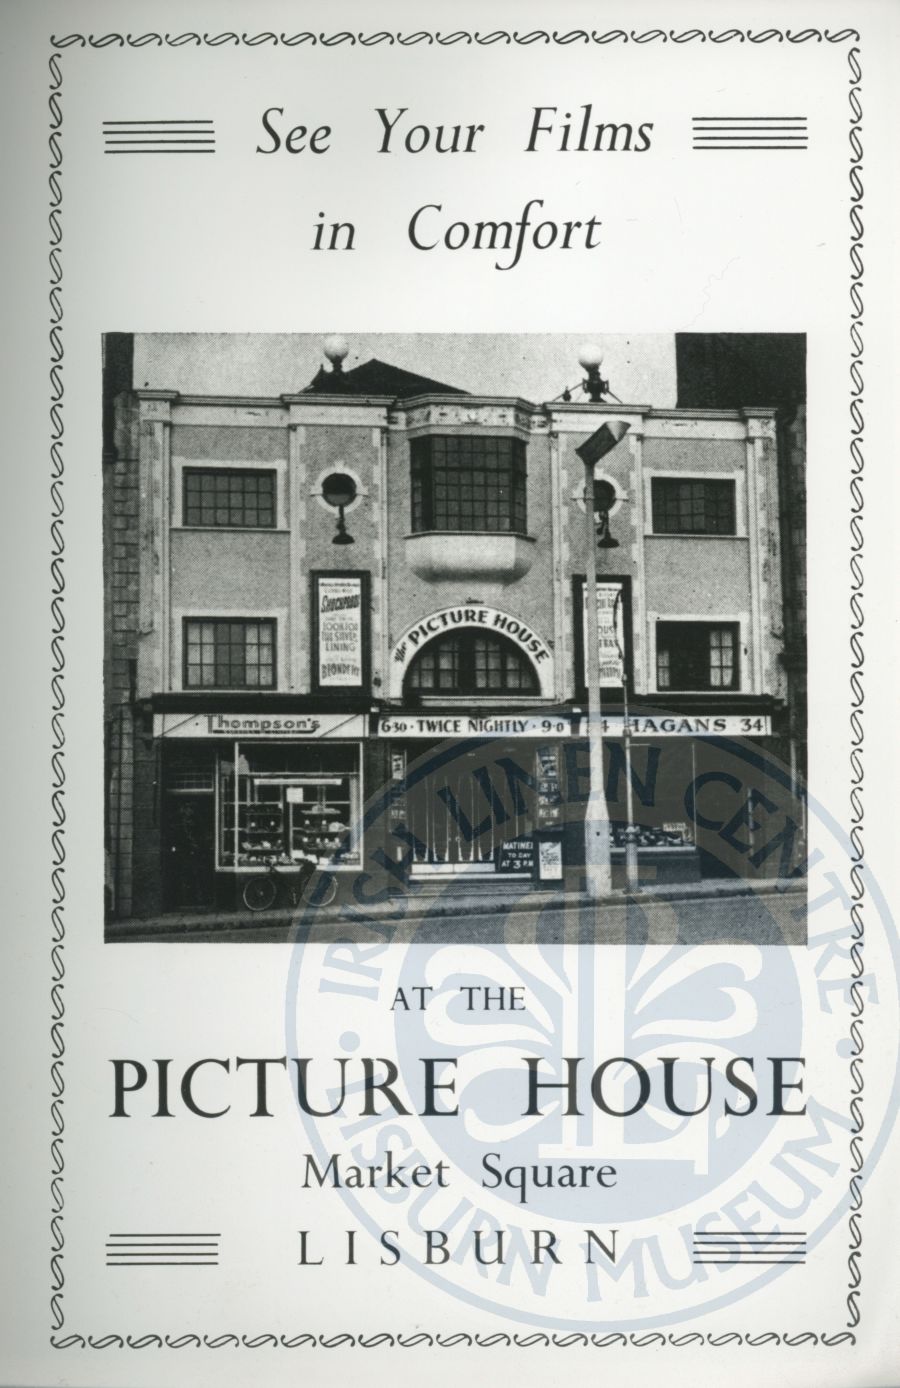 picture house lisburn market square ILC&LM Collection